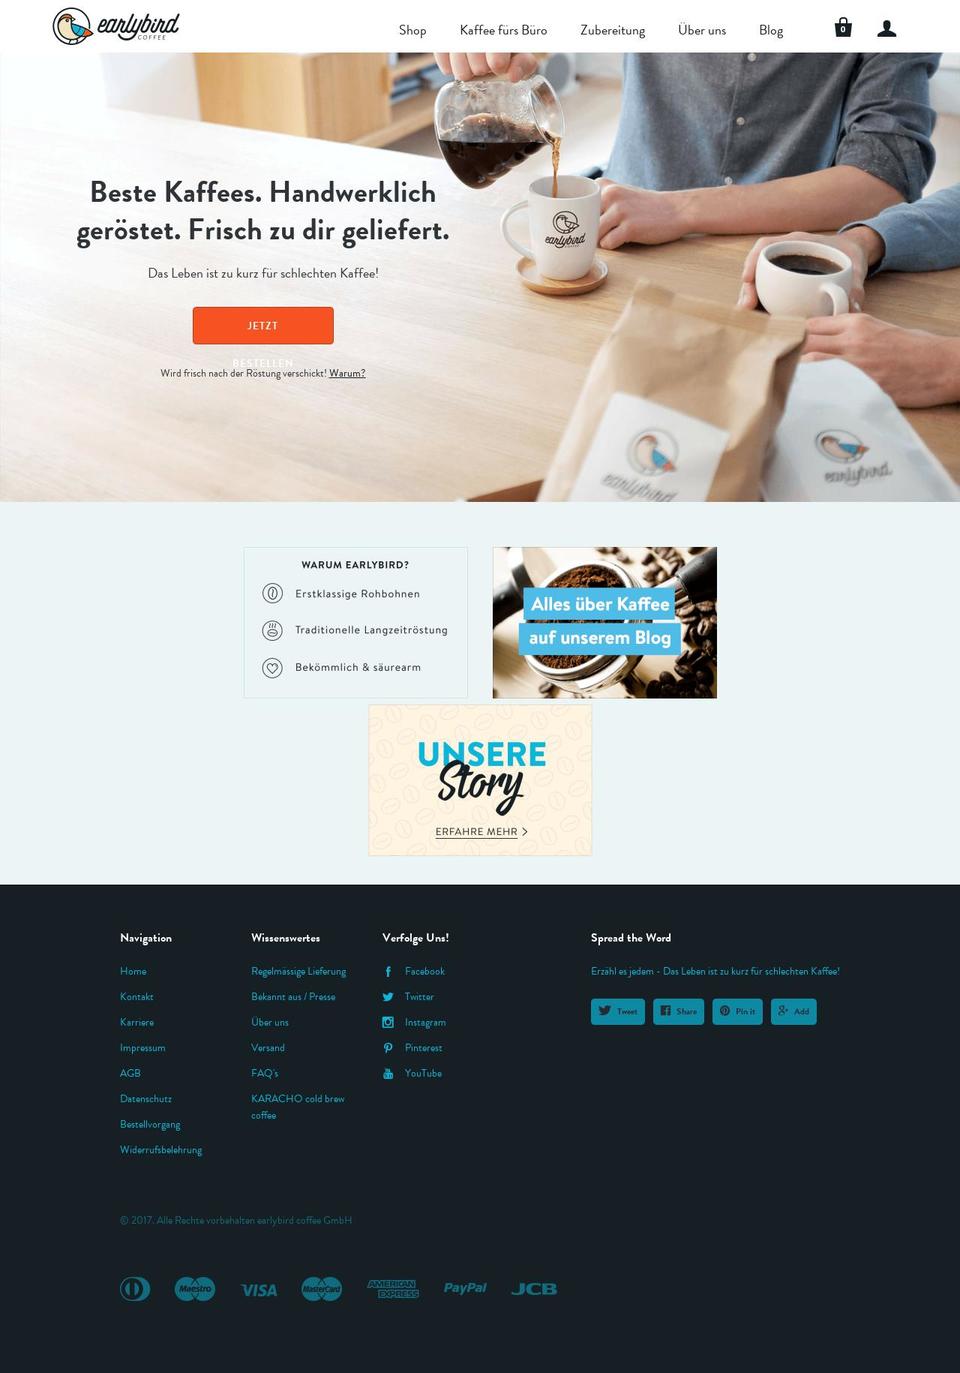 earlybird-coffee.de shopify website screenshot